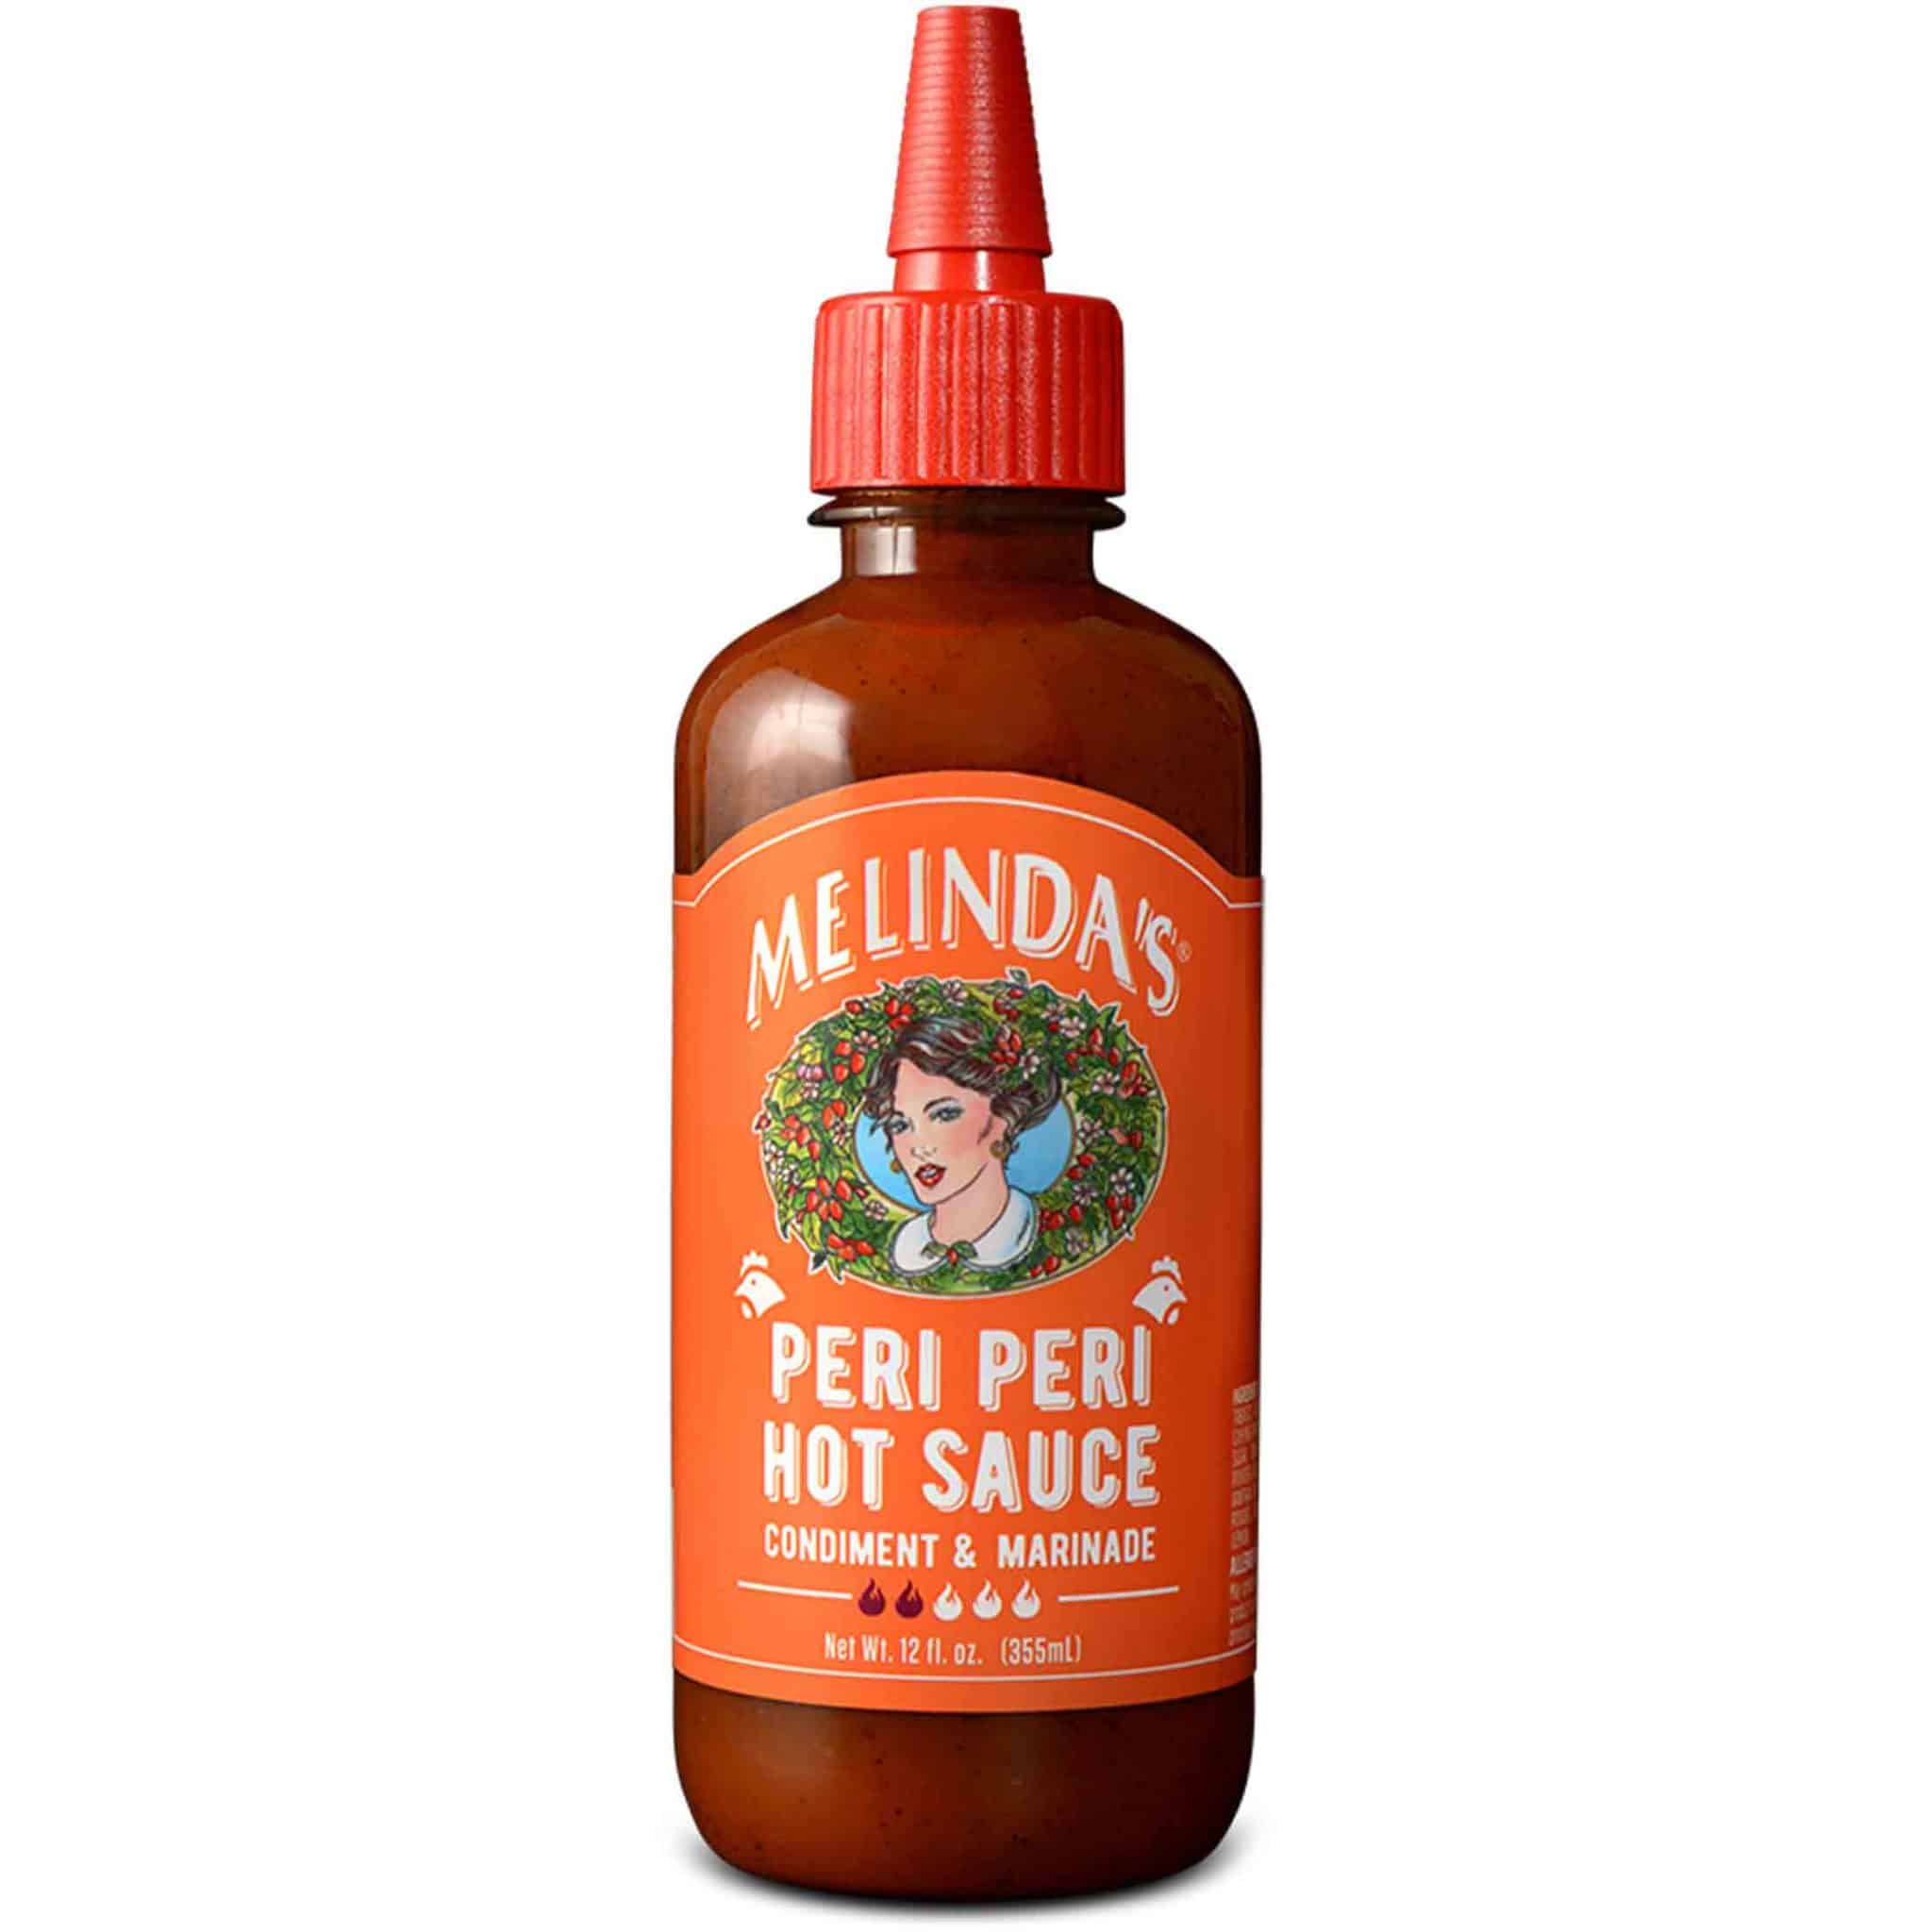 Melinda’s Peri Peri Hot Sauce